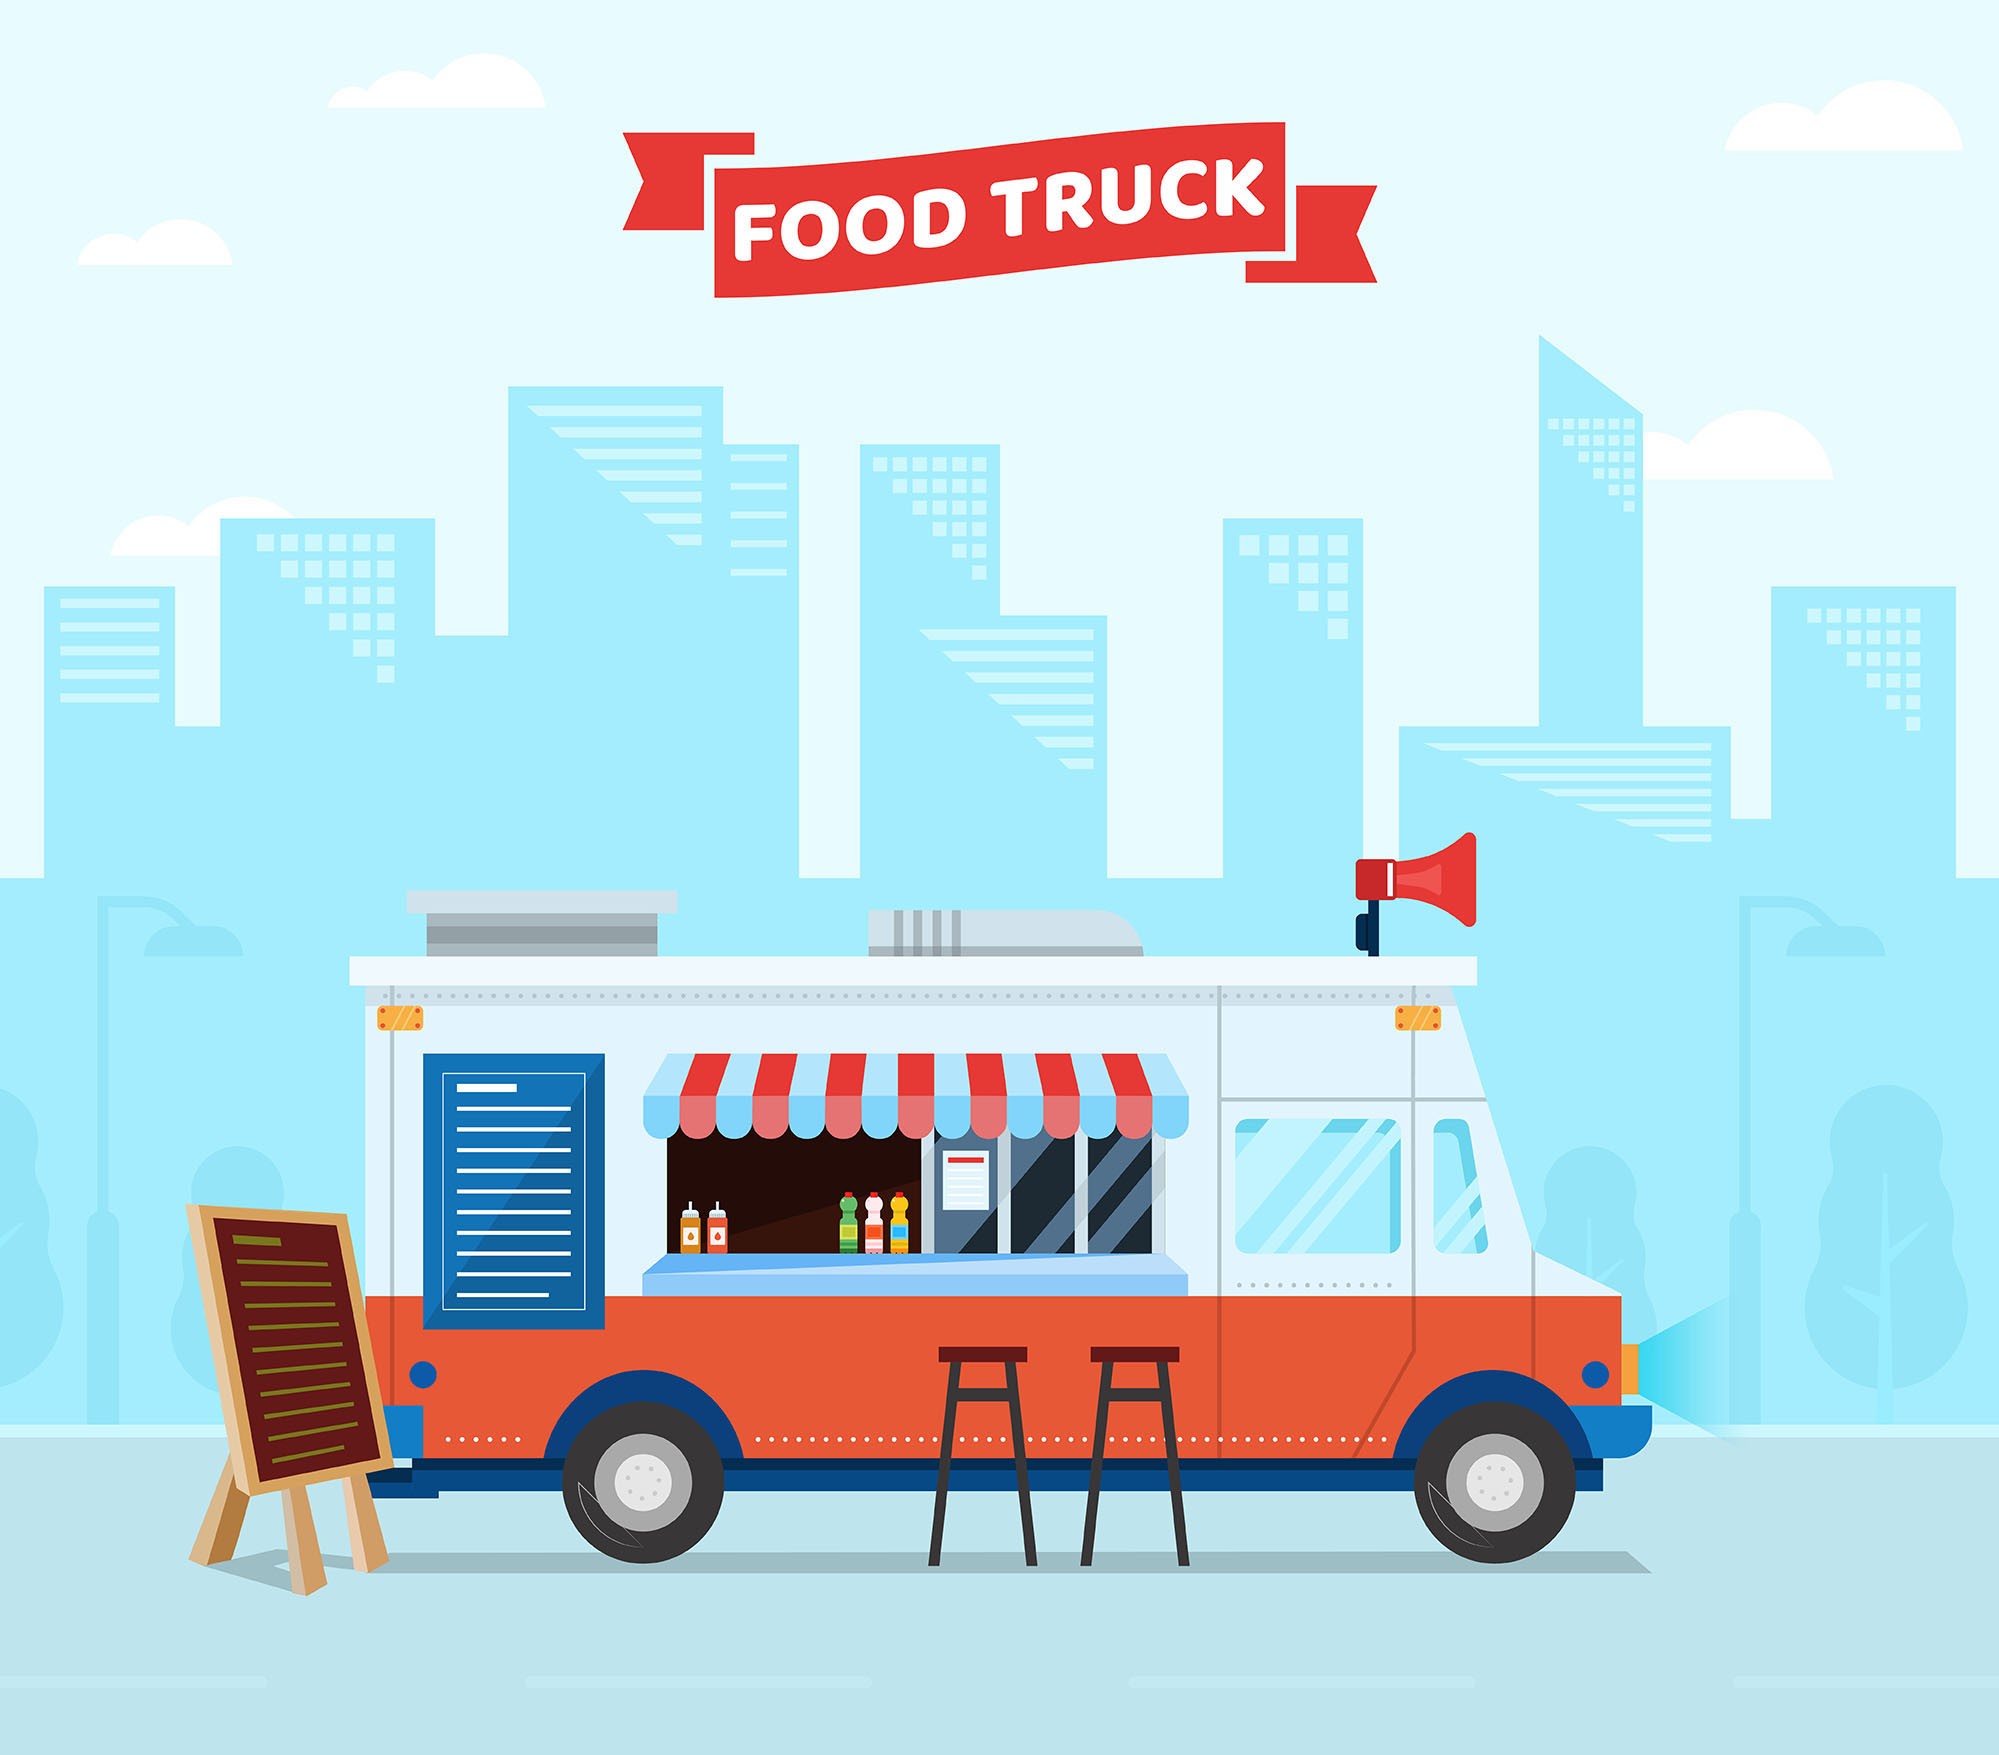 Food truck business plan